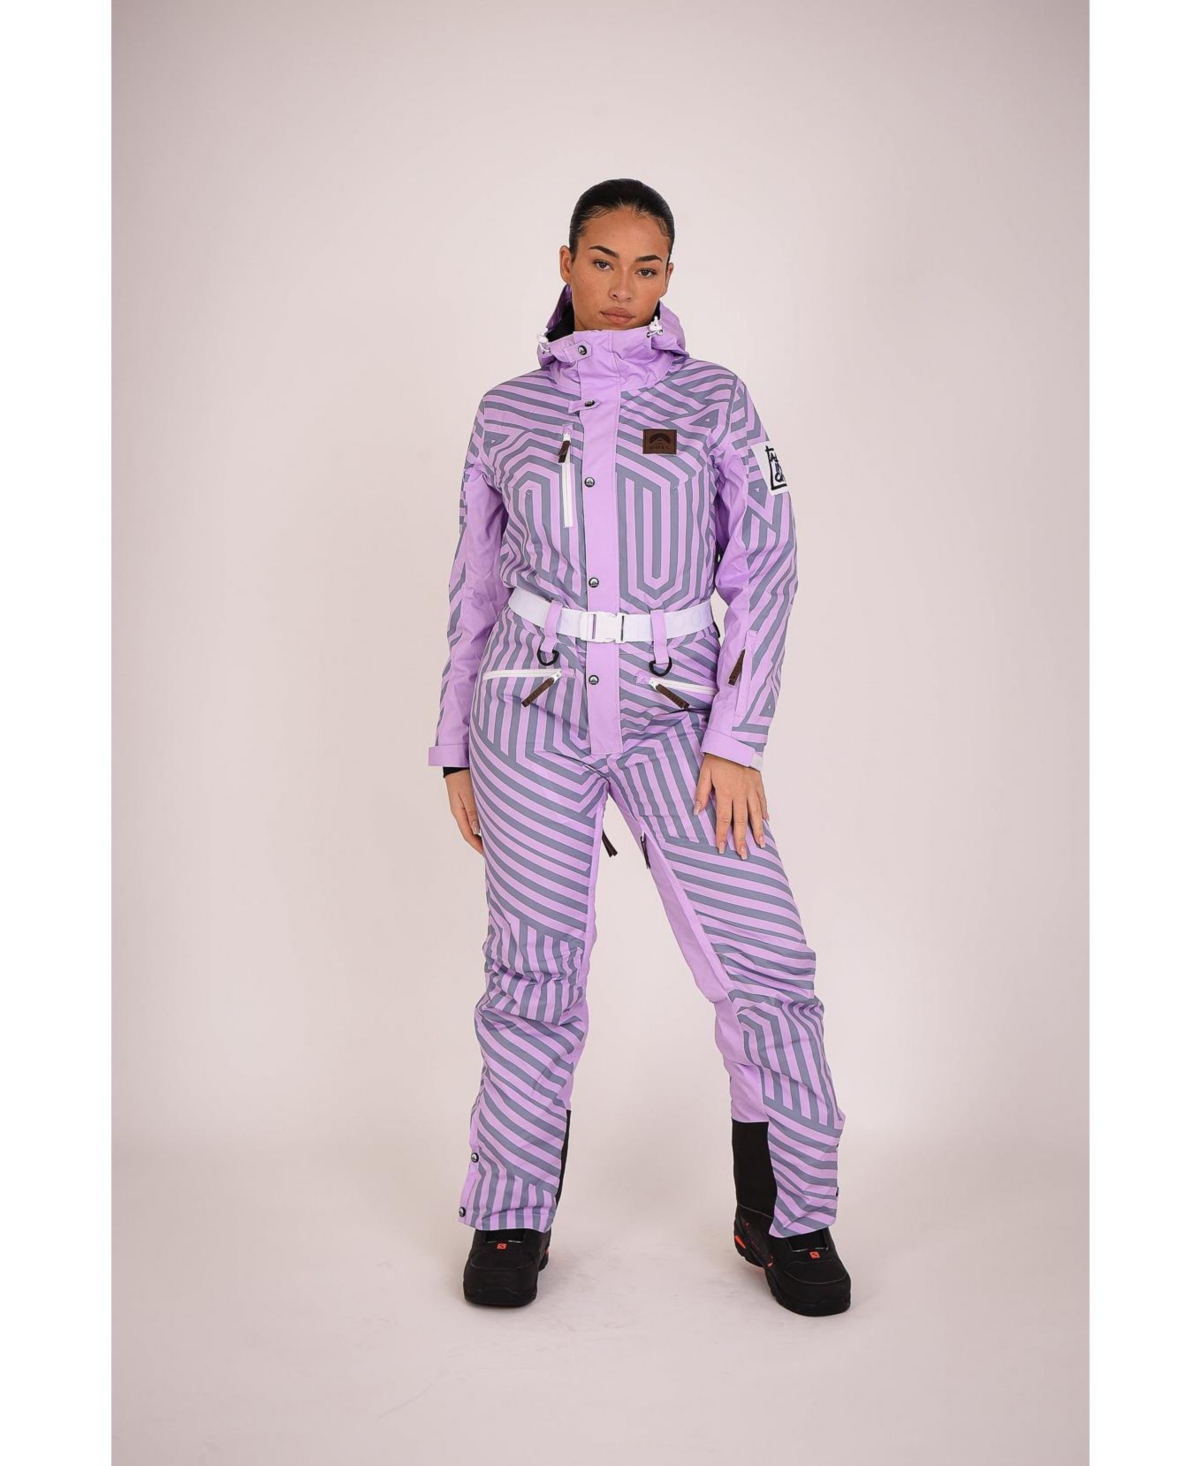 Fall Line Purple & Grey Curved Women's Ski Suit - Purple, grey